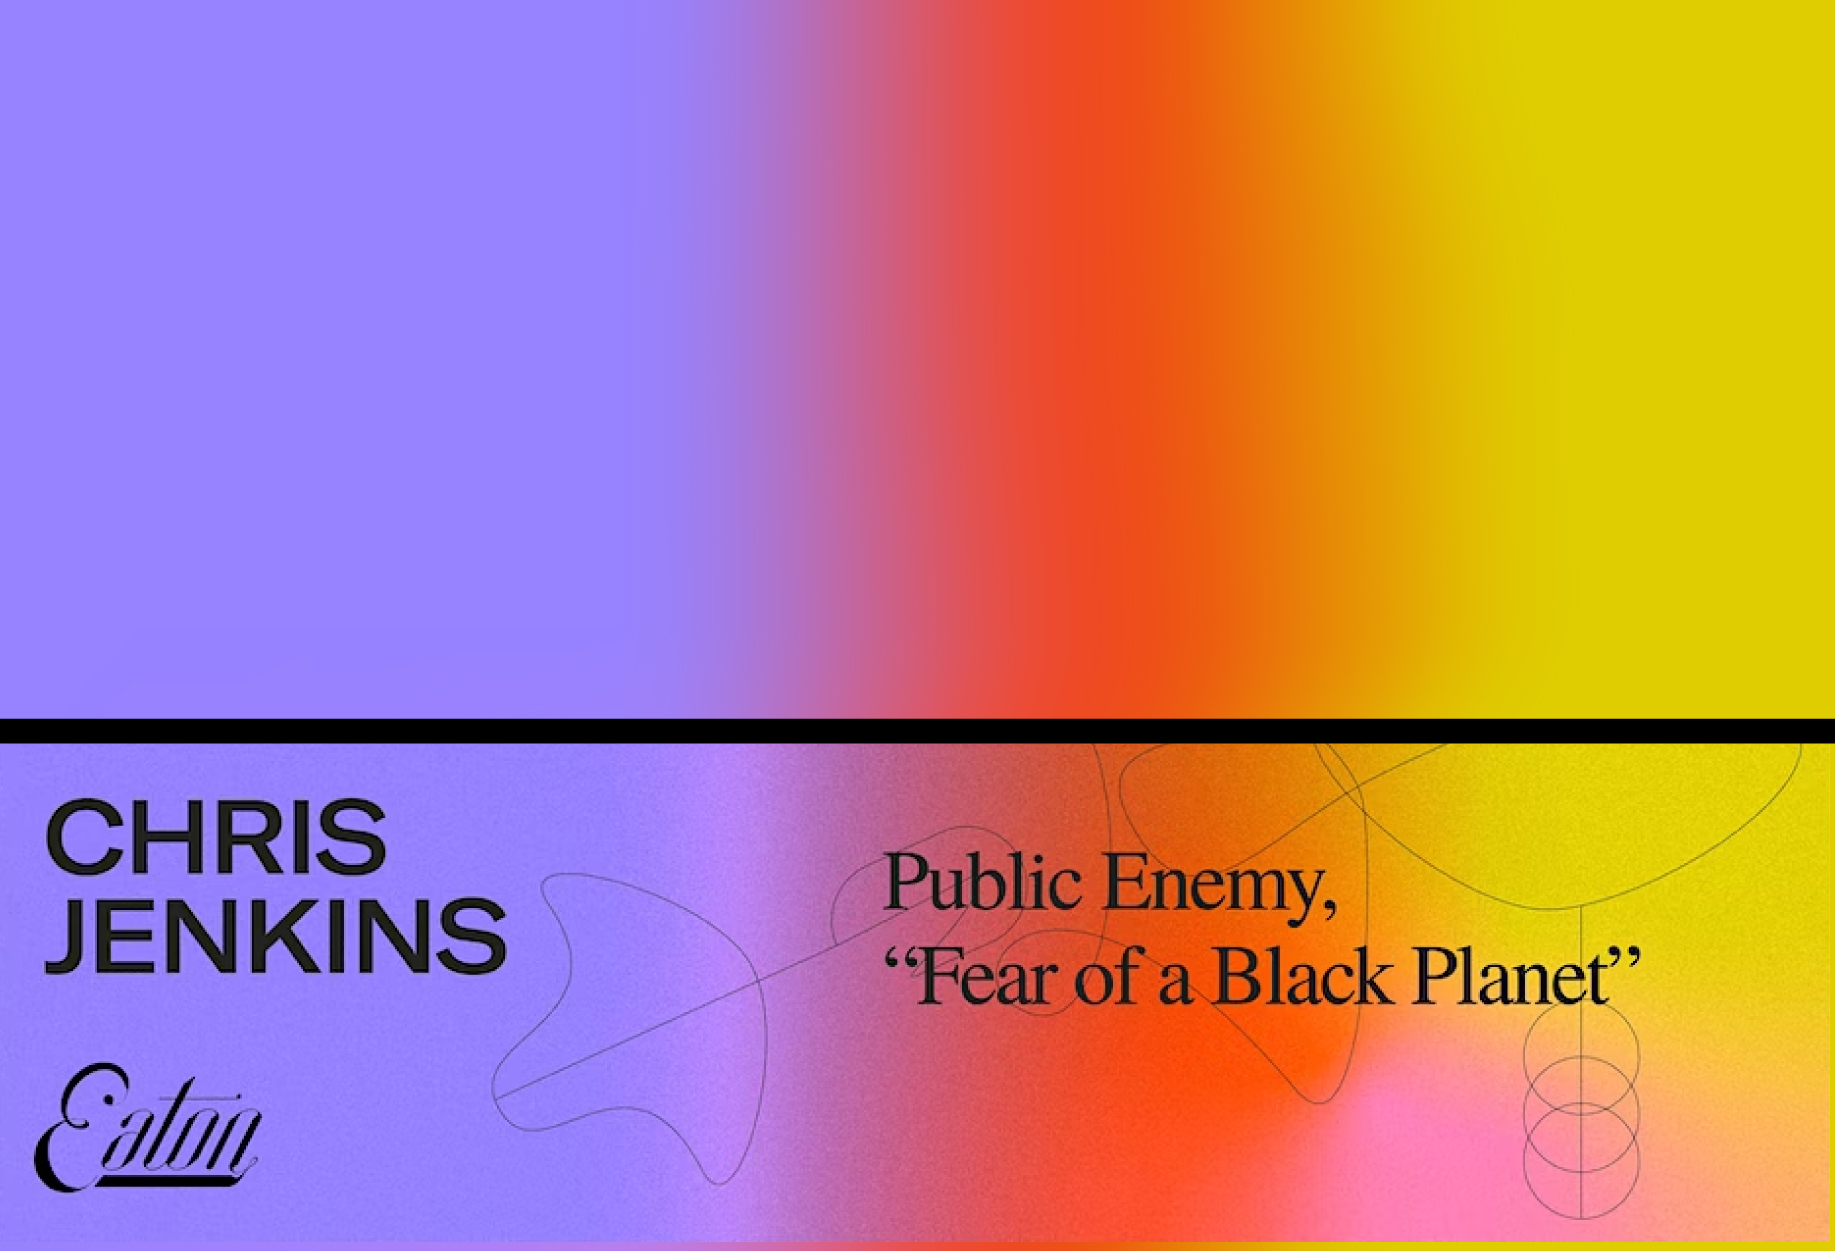 A2B; Chris Jenkins on Public Enemy’s “Fear of a Black Planet”